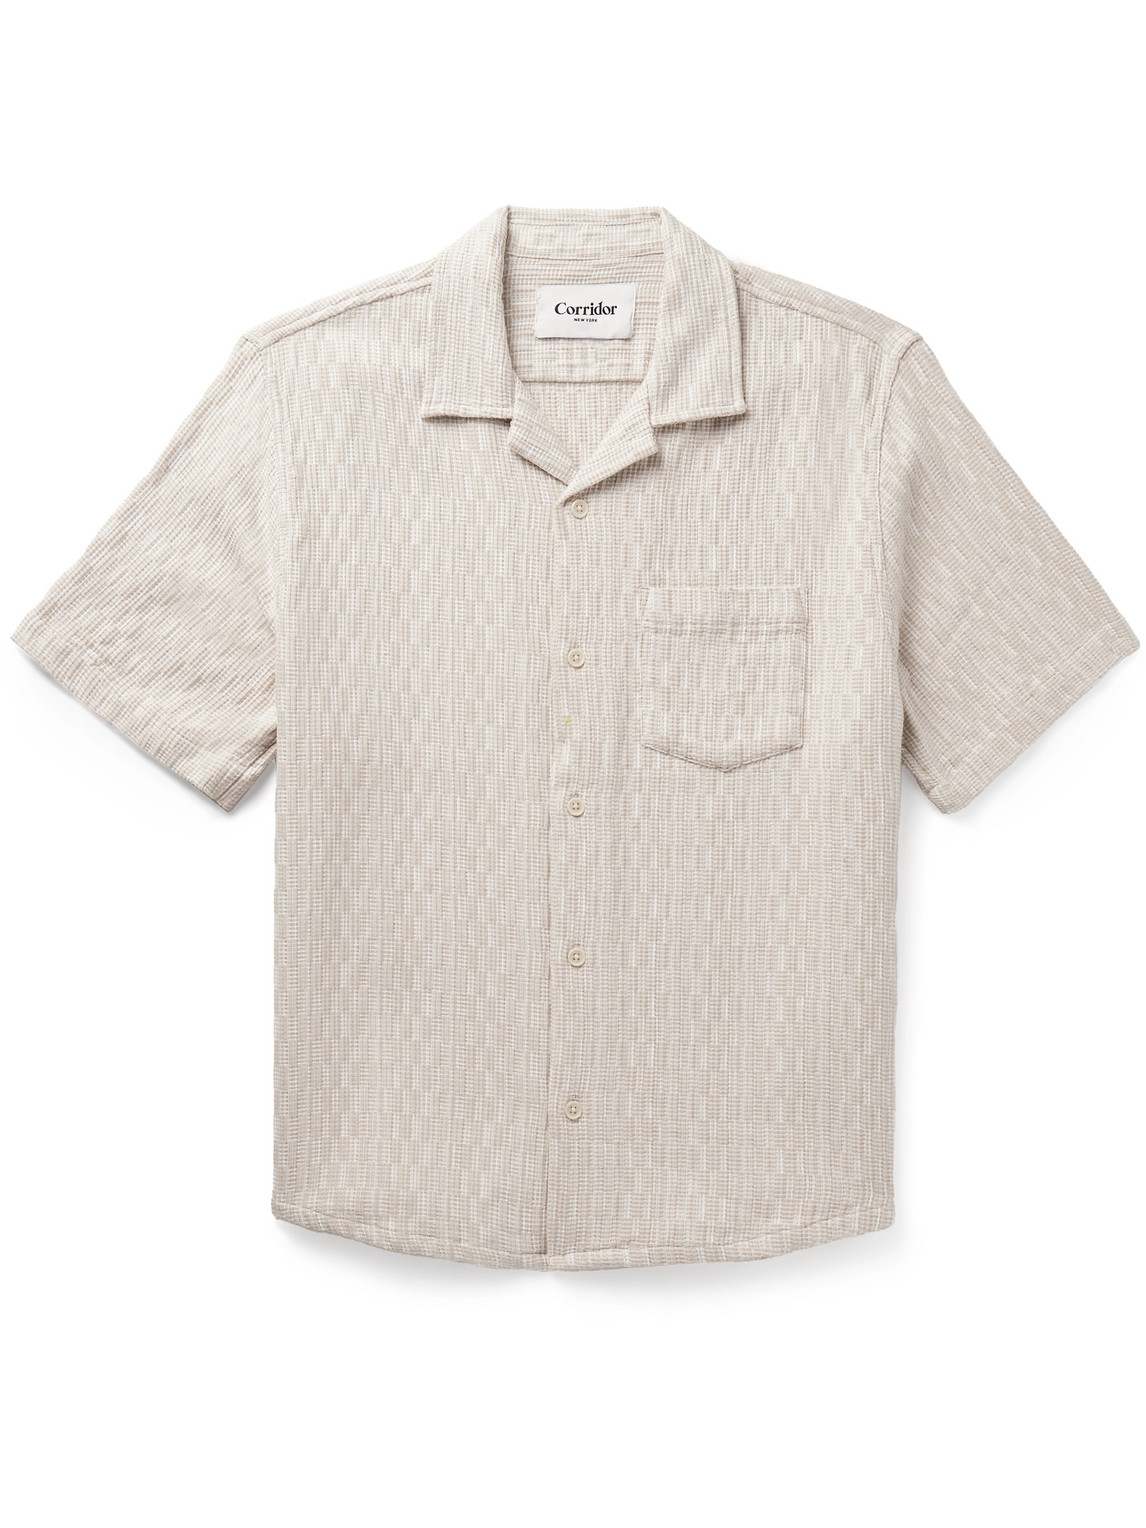 Corridor - Camp-Collar Cotton-Jacquard Shirt - Men - White - L von Corridor